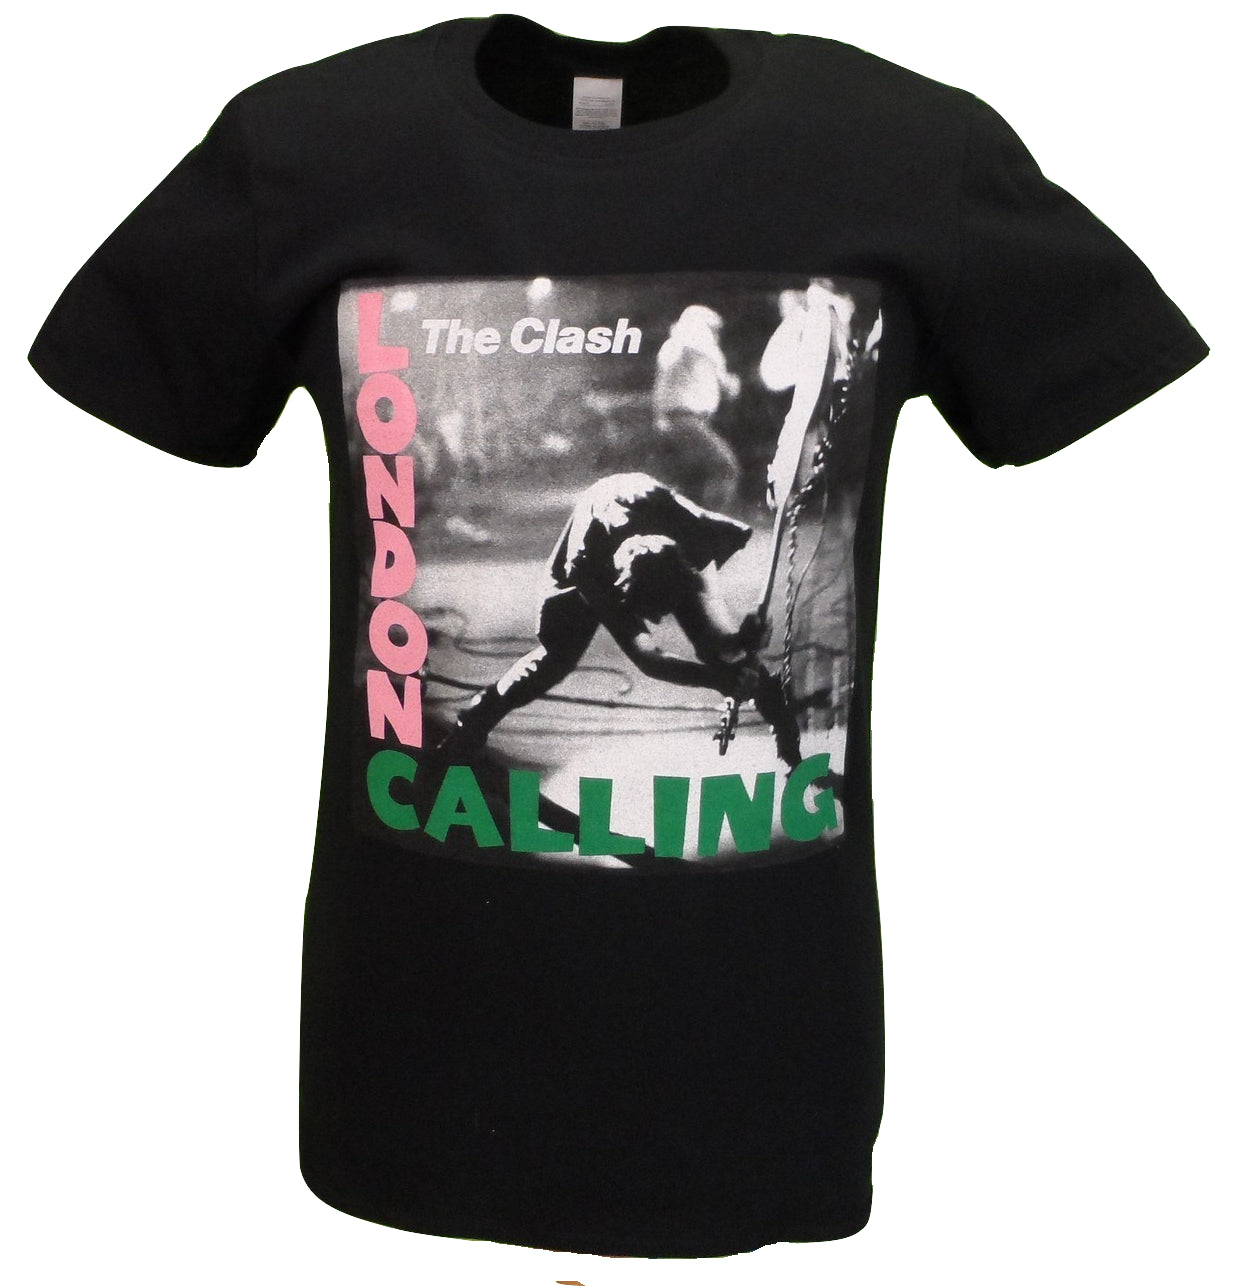 The Clash T-Shirts & Clothing